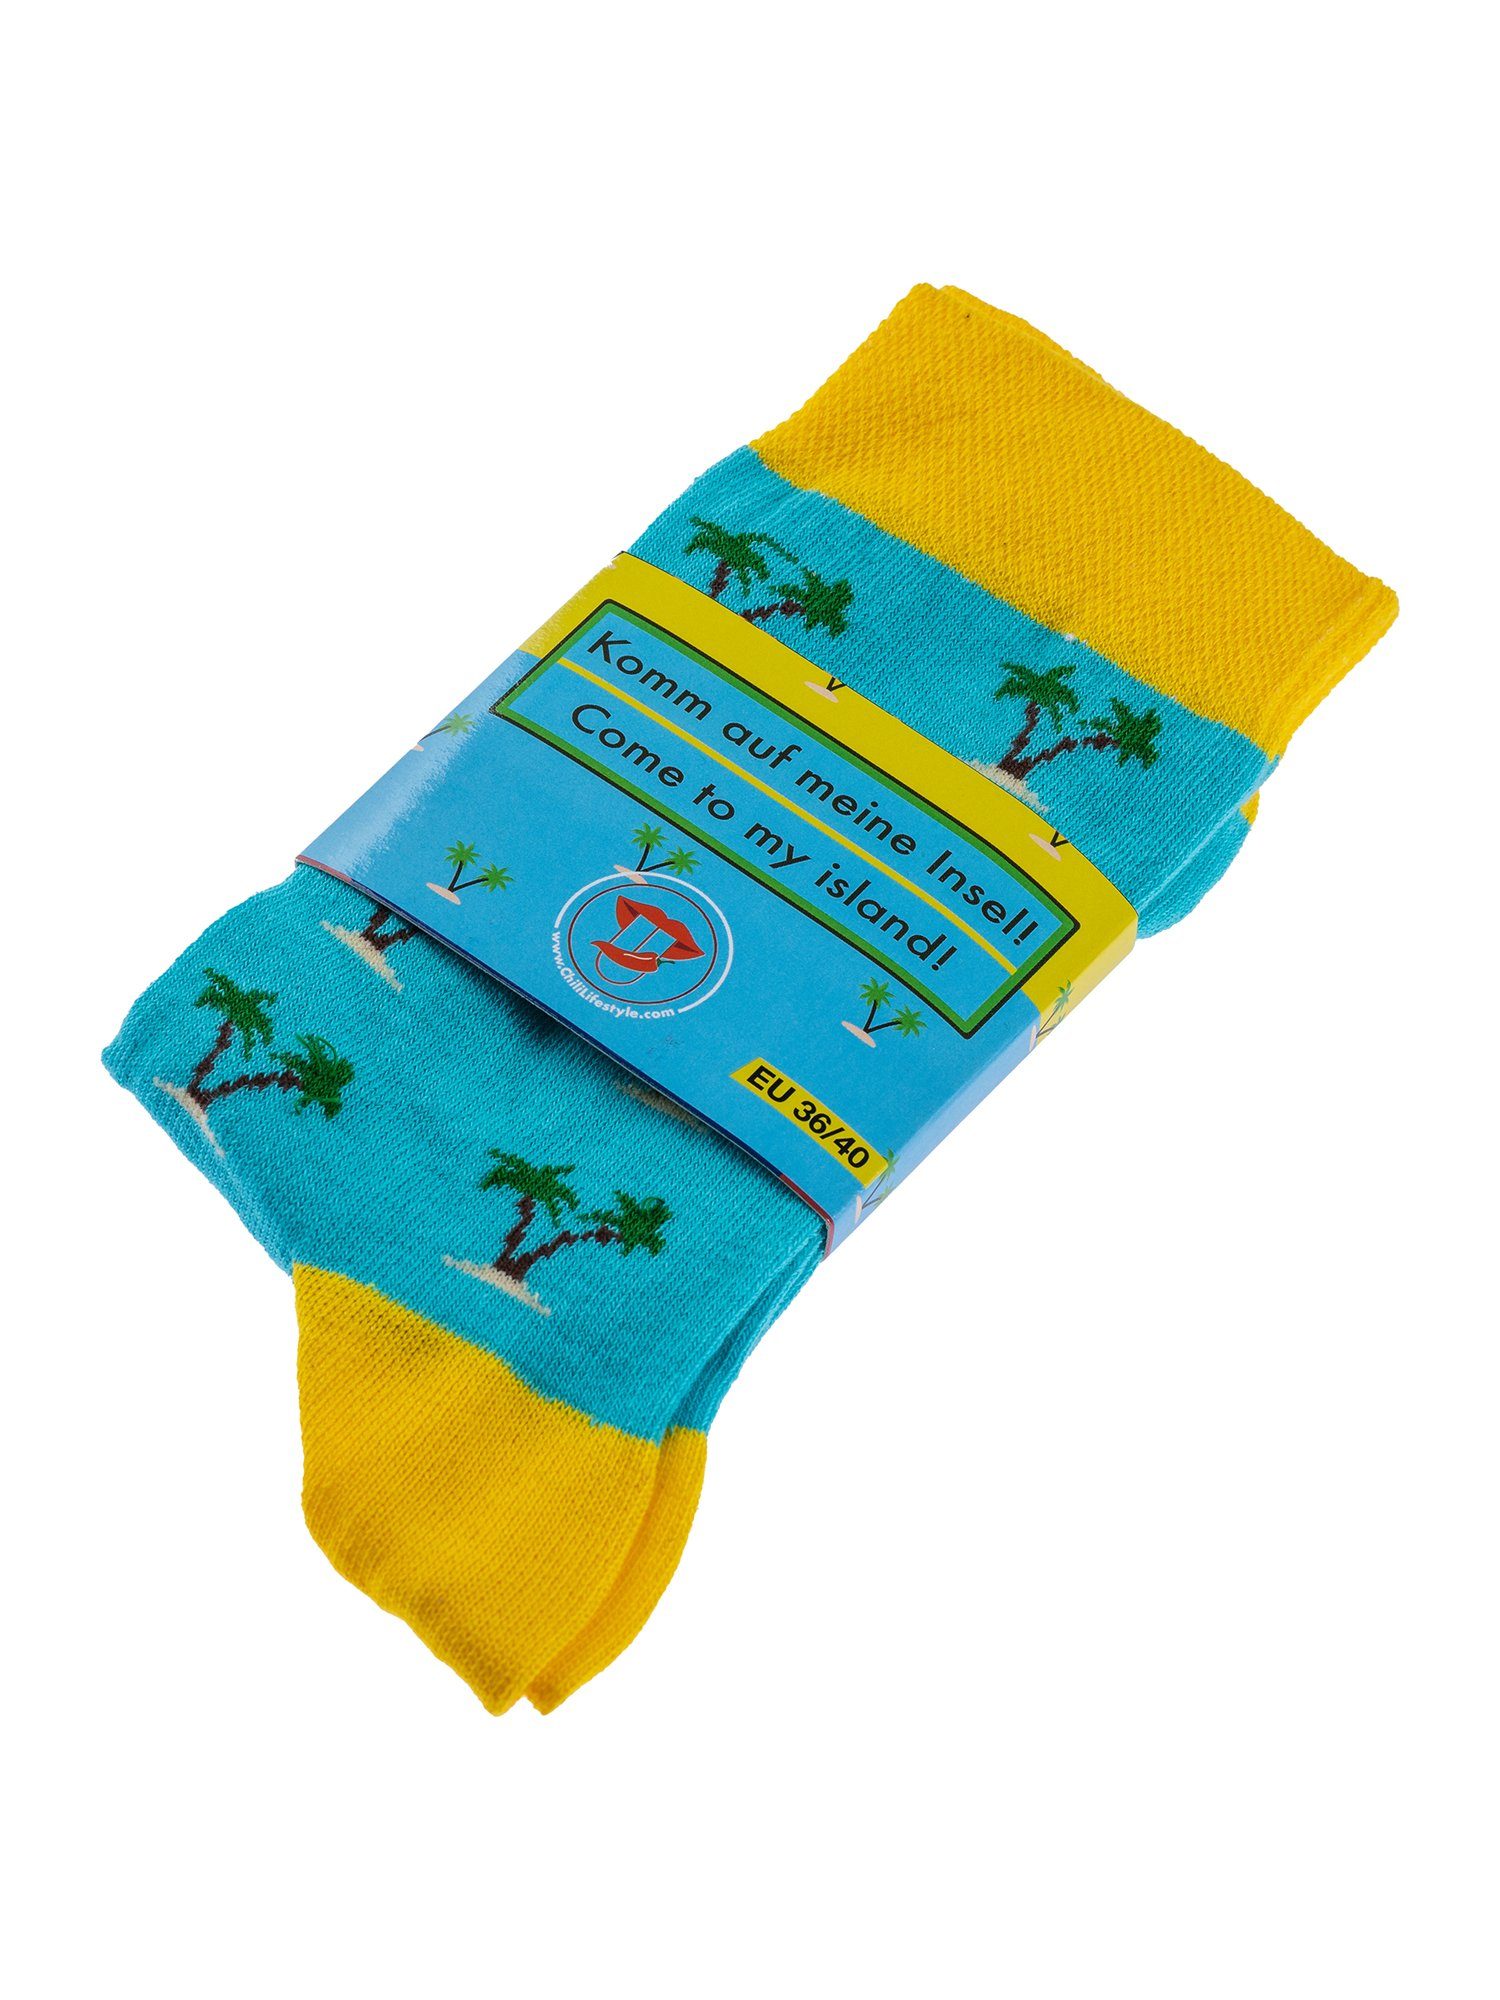 Insel Leisure Banderole Freizeitsocken Socks Lifestyle Chili